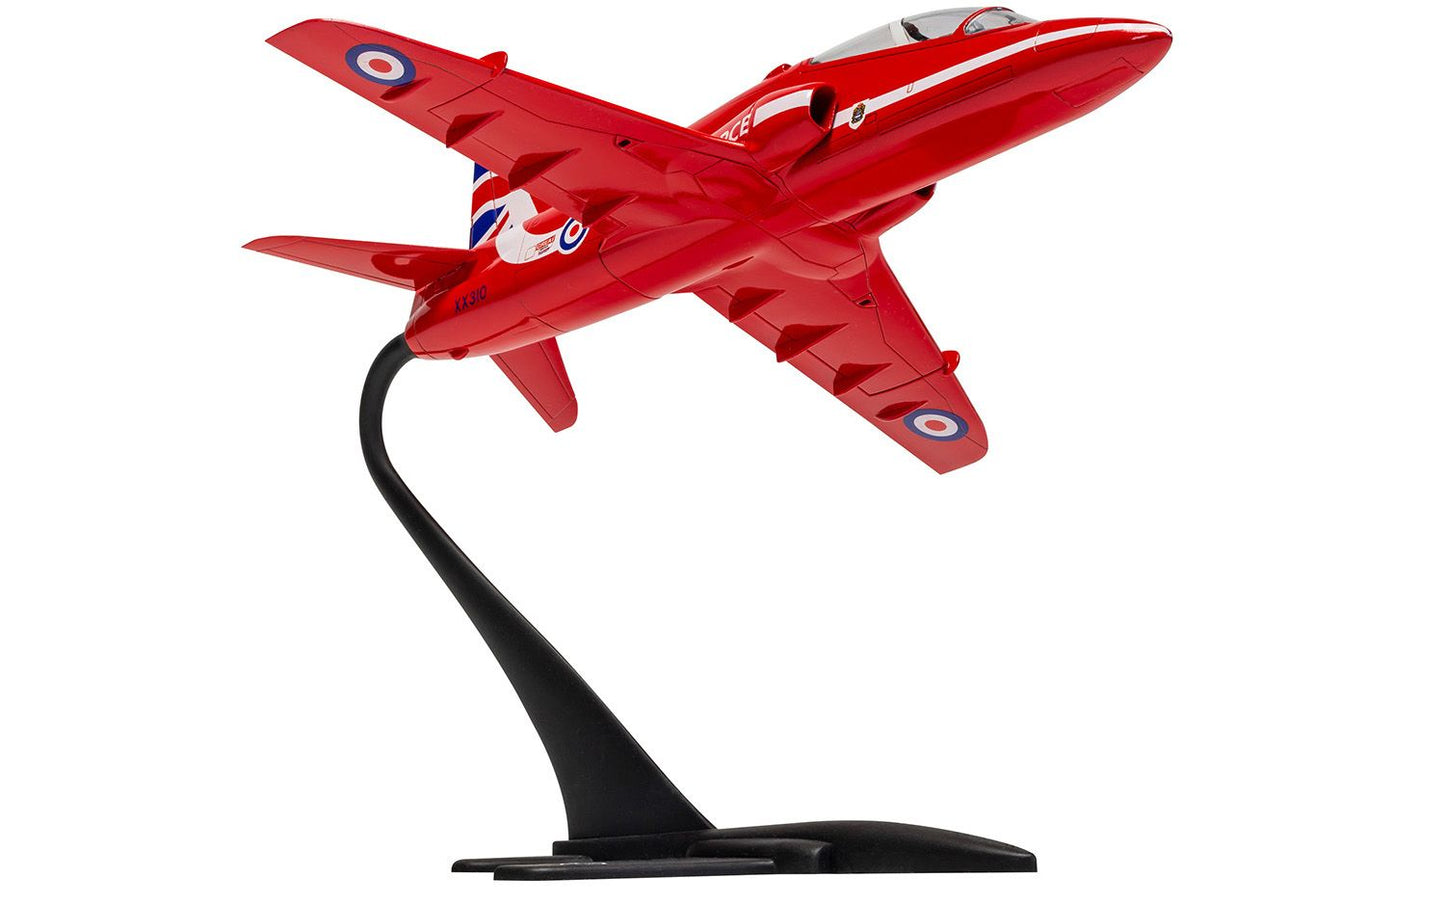 Airfix 1/72nd scale RAF Red Arrows Hawk Starter Kit